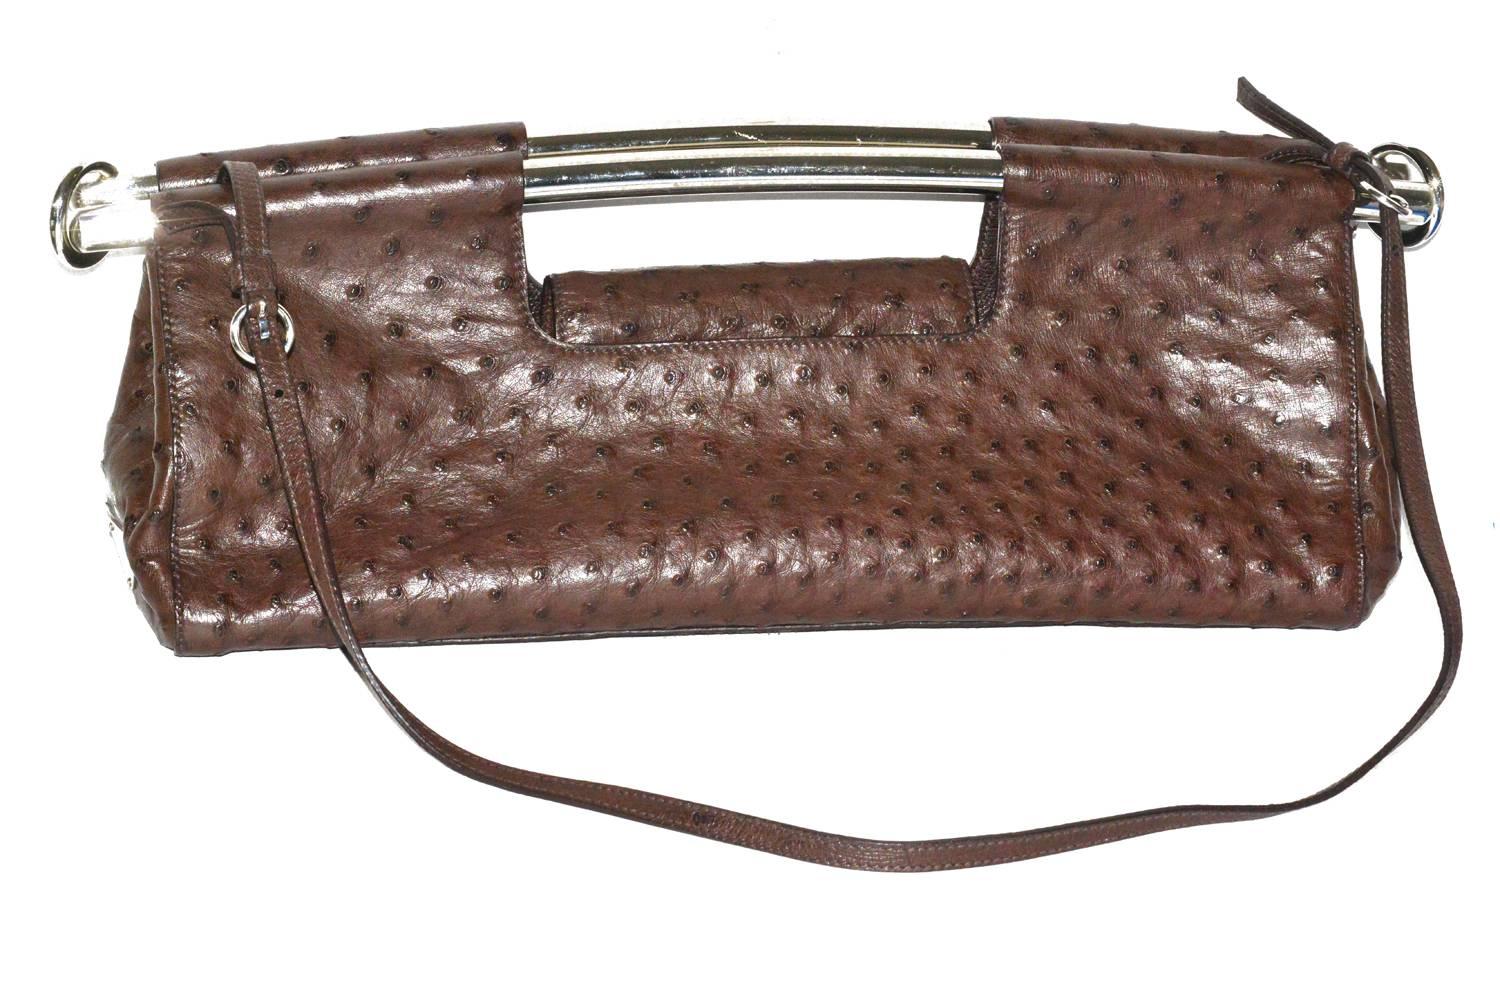 Fabulous Prada ostrich handbag with detachable shoulder strap. Pristine condition, rare bag. Measurements are:  16 in. x 7 in. x 3 in.